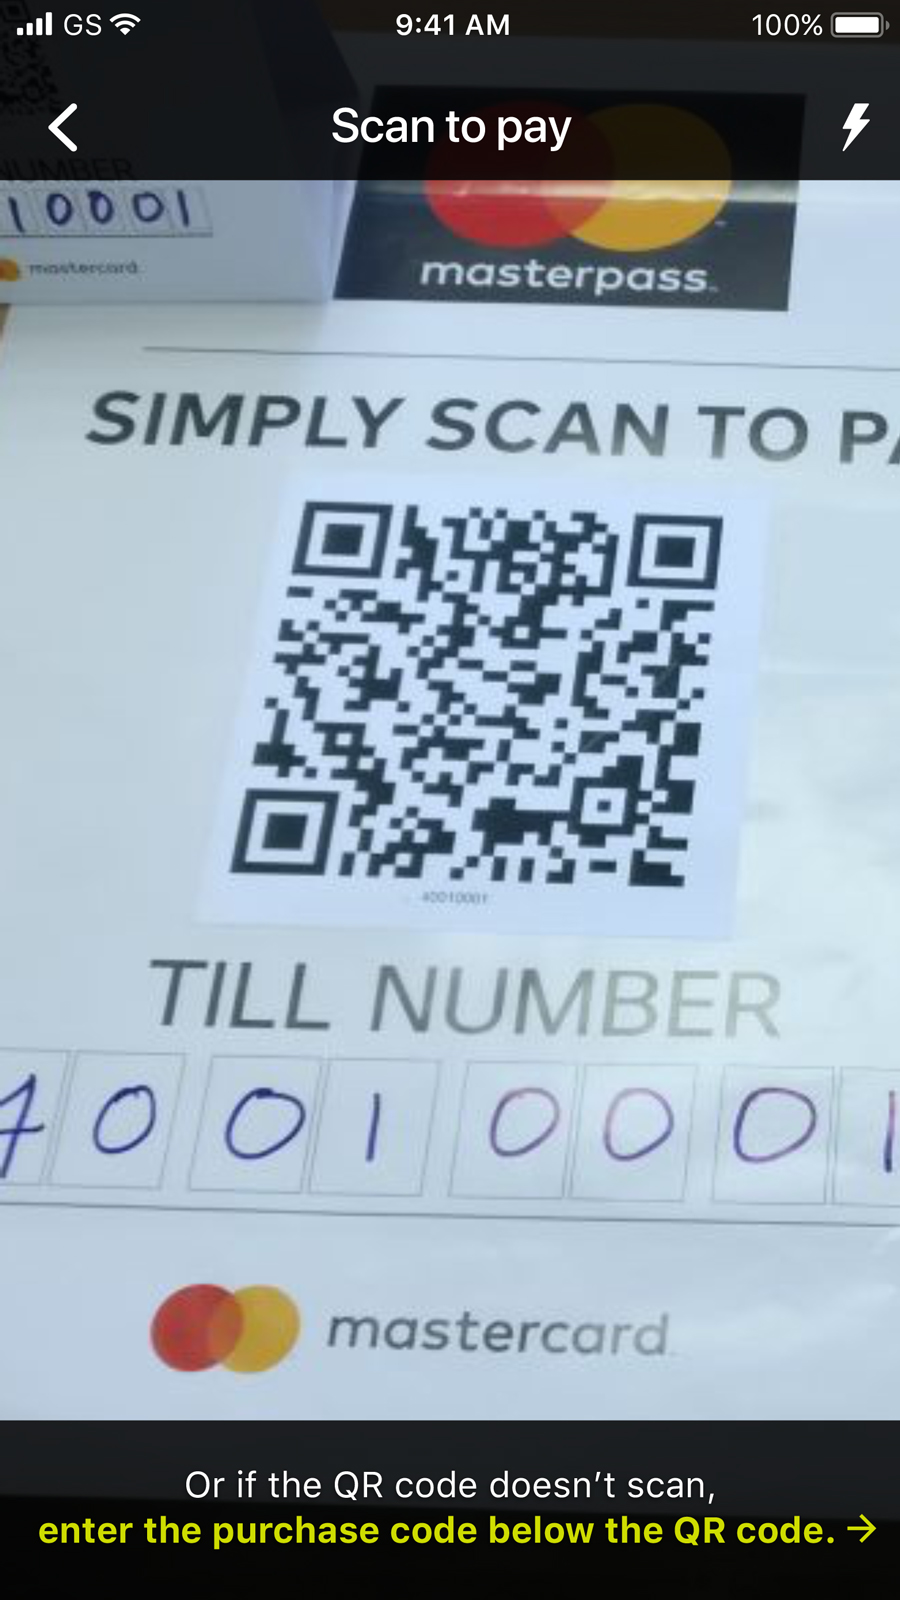 Shmix-Scan-to-pay-UI-4.1